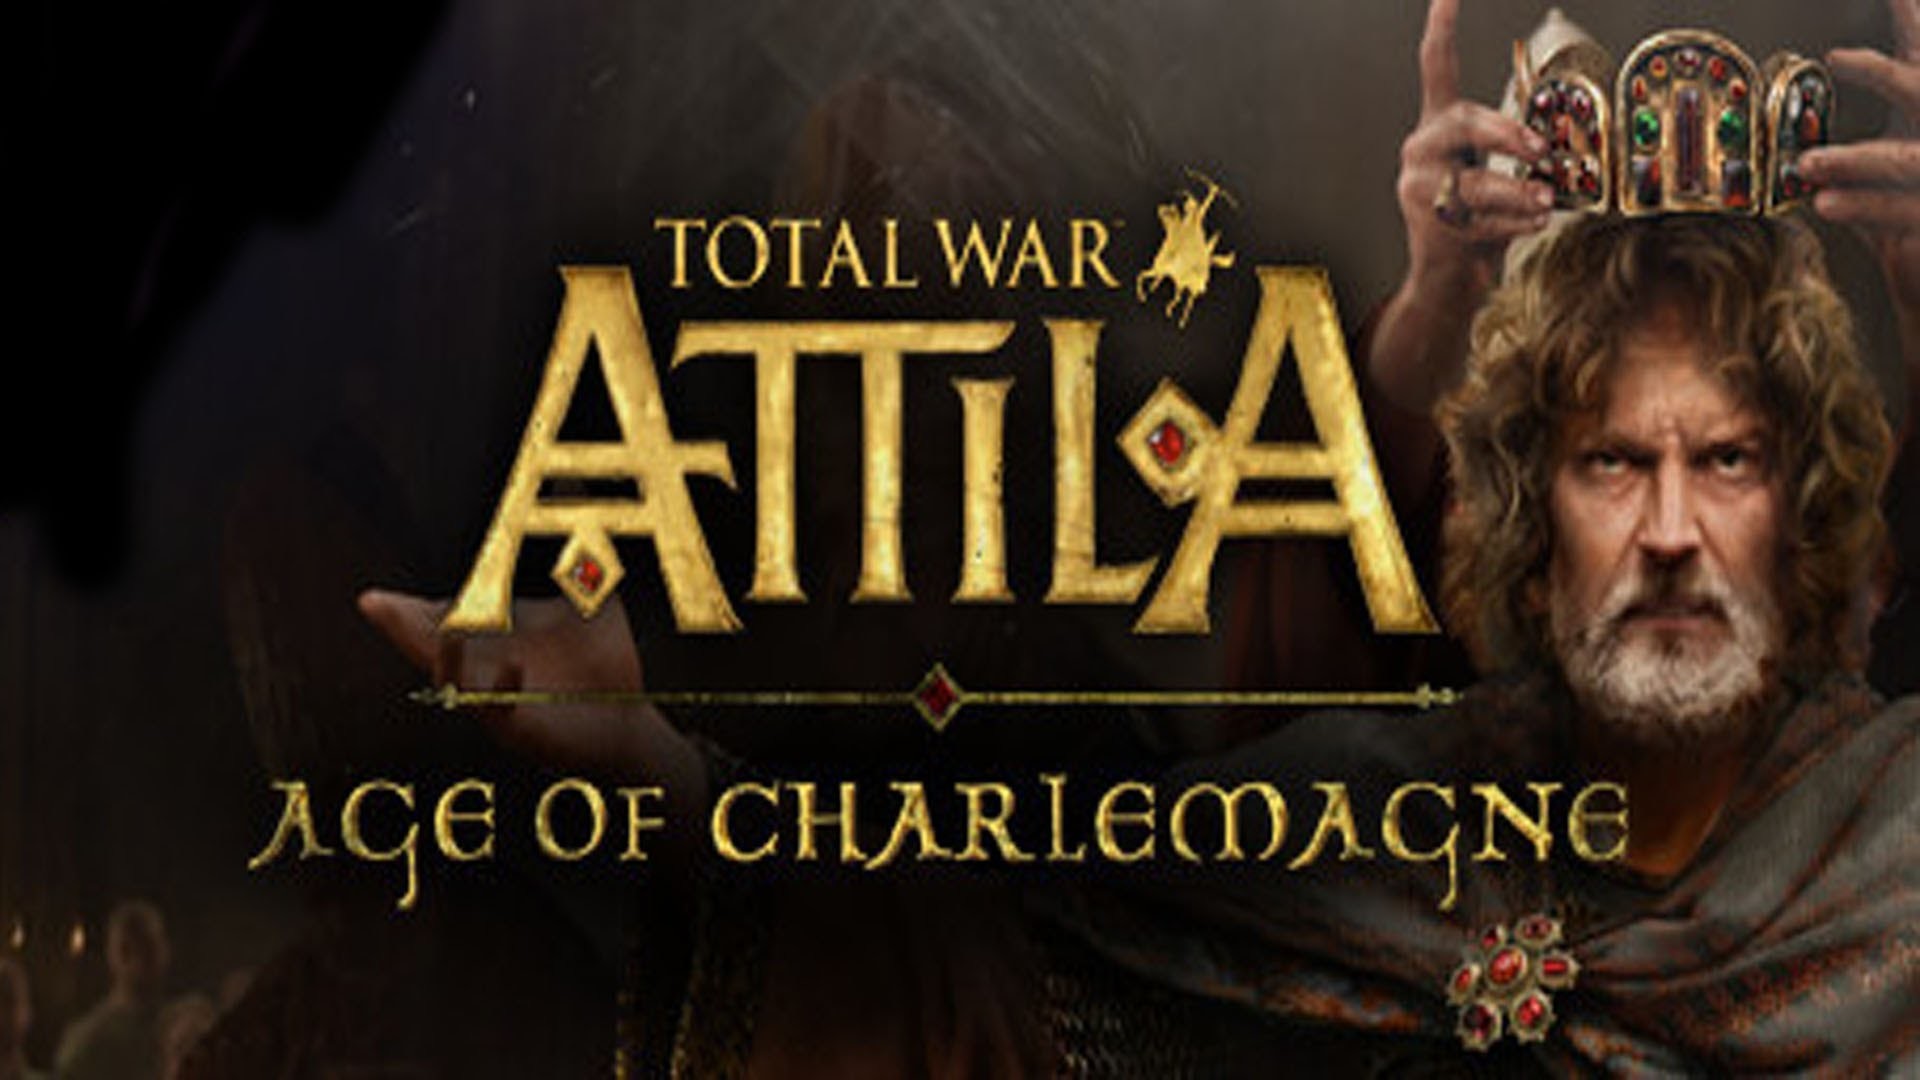 1920x1080 Total War: ATTILA - Age of Charlemagne Faction Vote